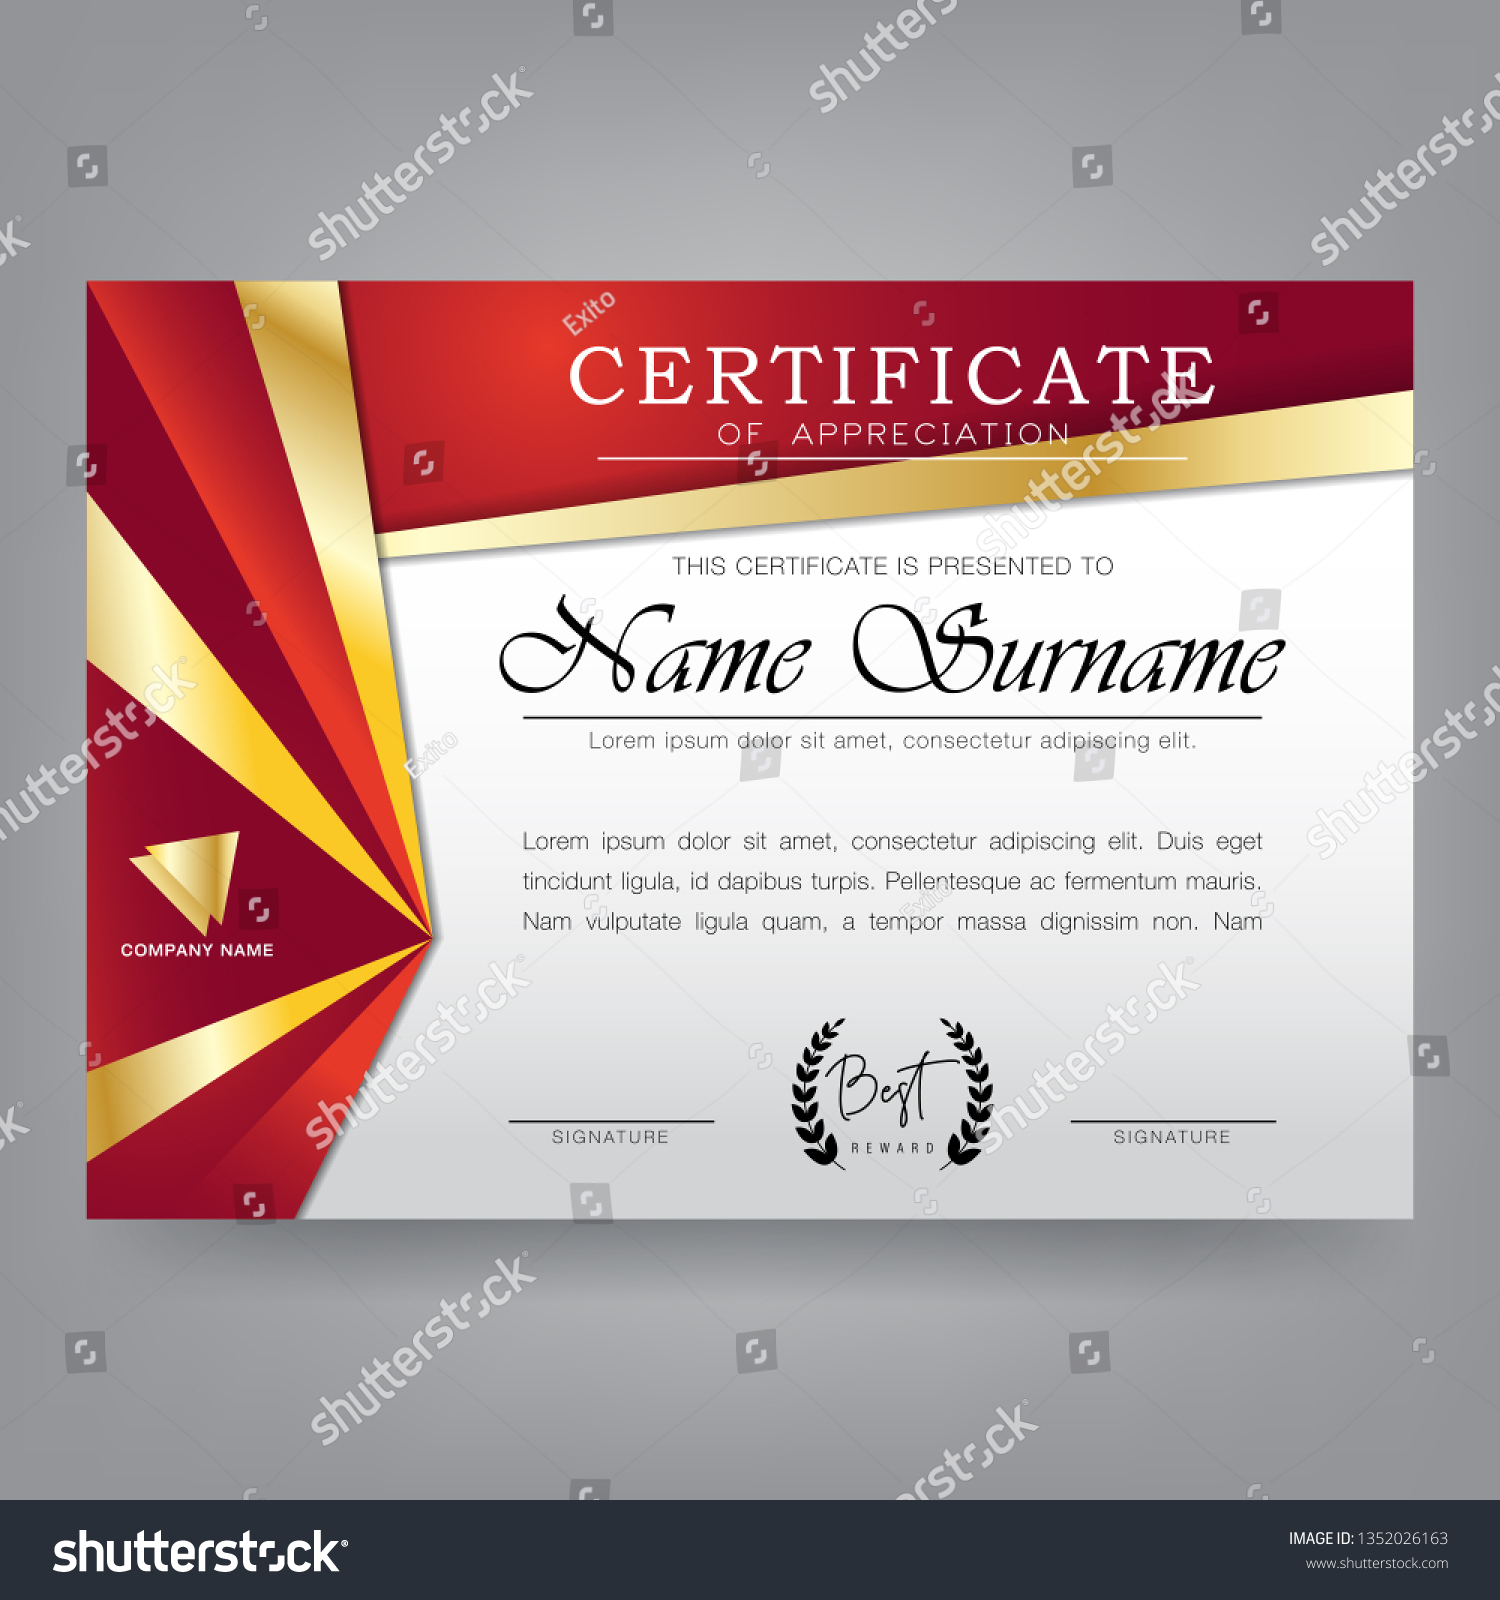 Modern Certificate Design Template from image.shutterstock.com